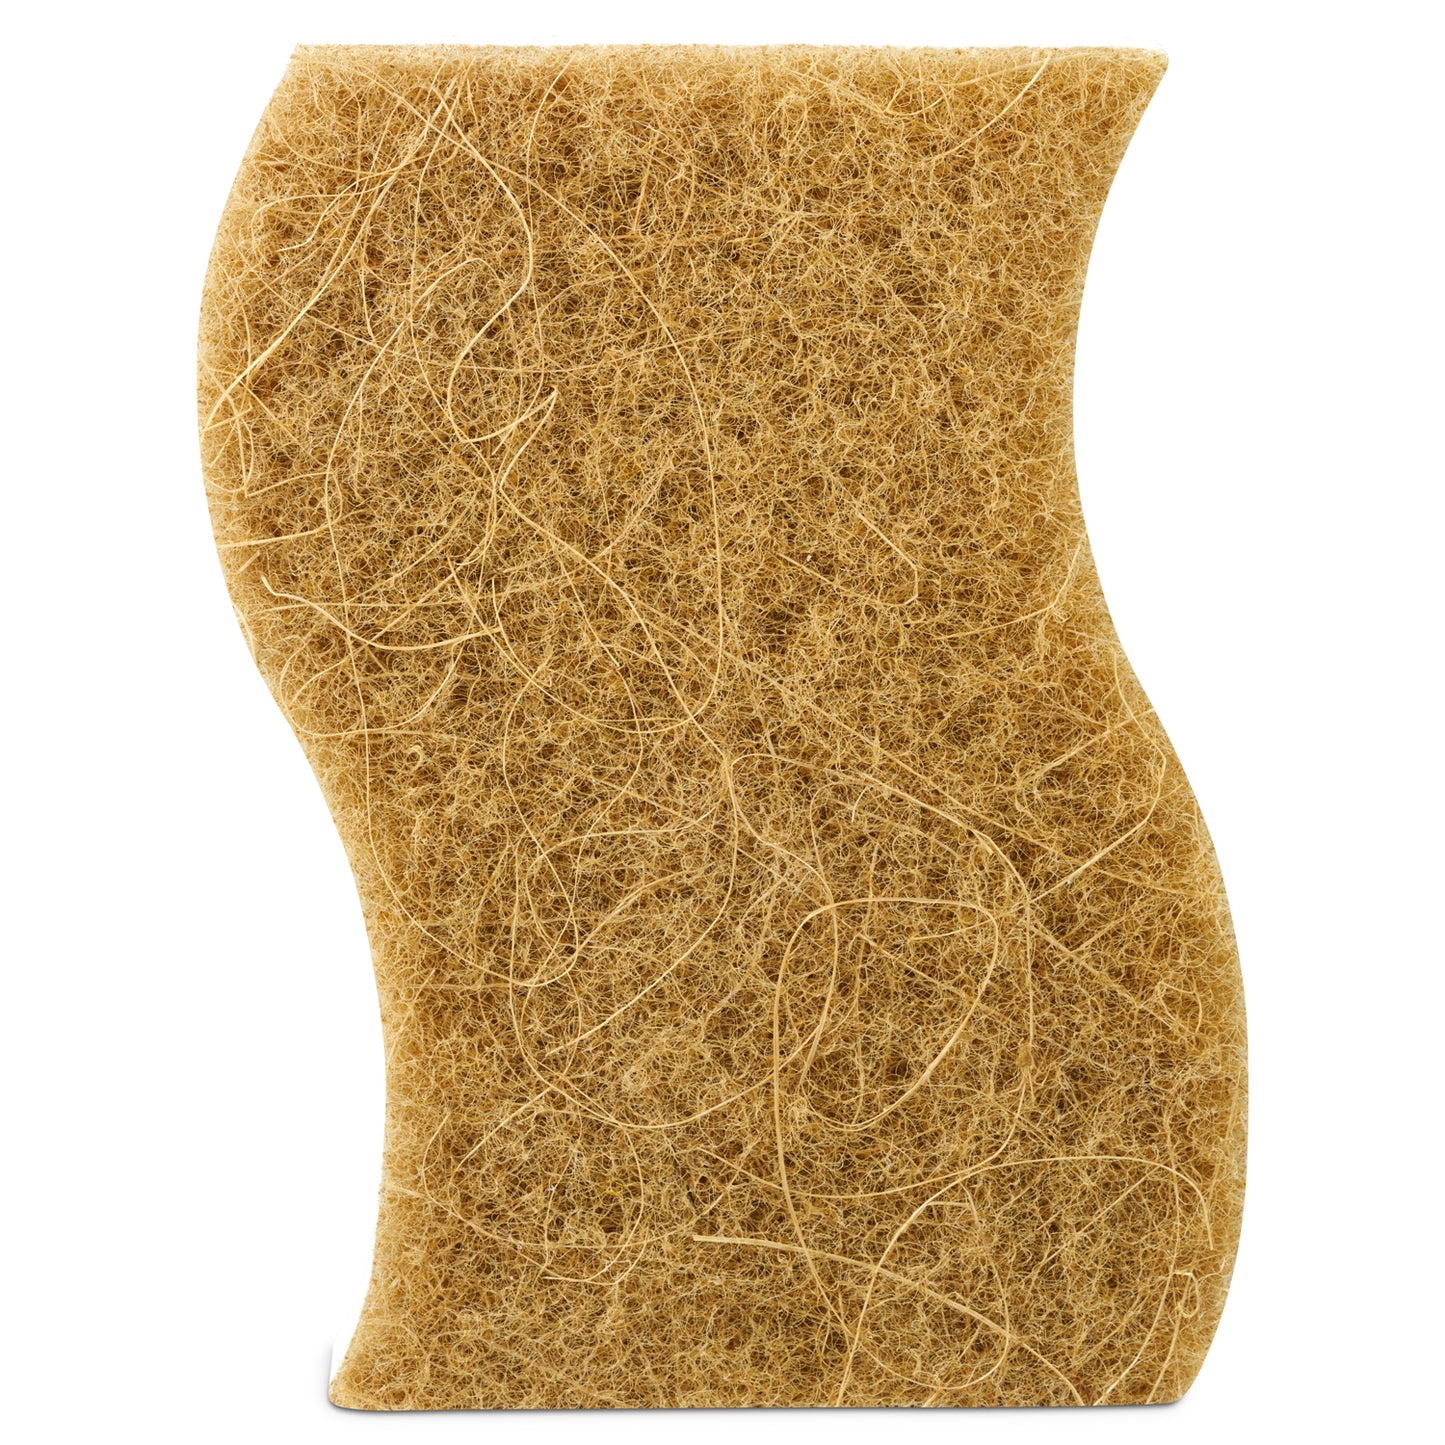 Biodegradable Eco Sponge - 9 Pack